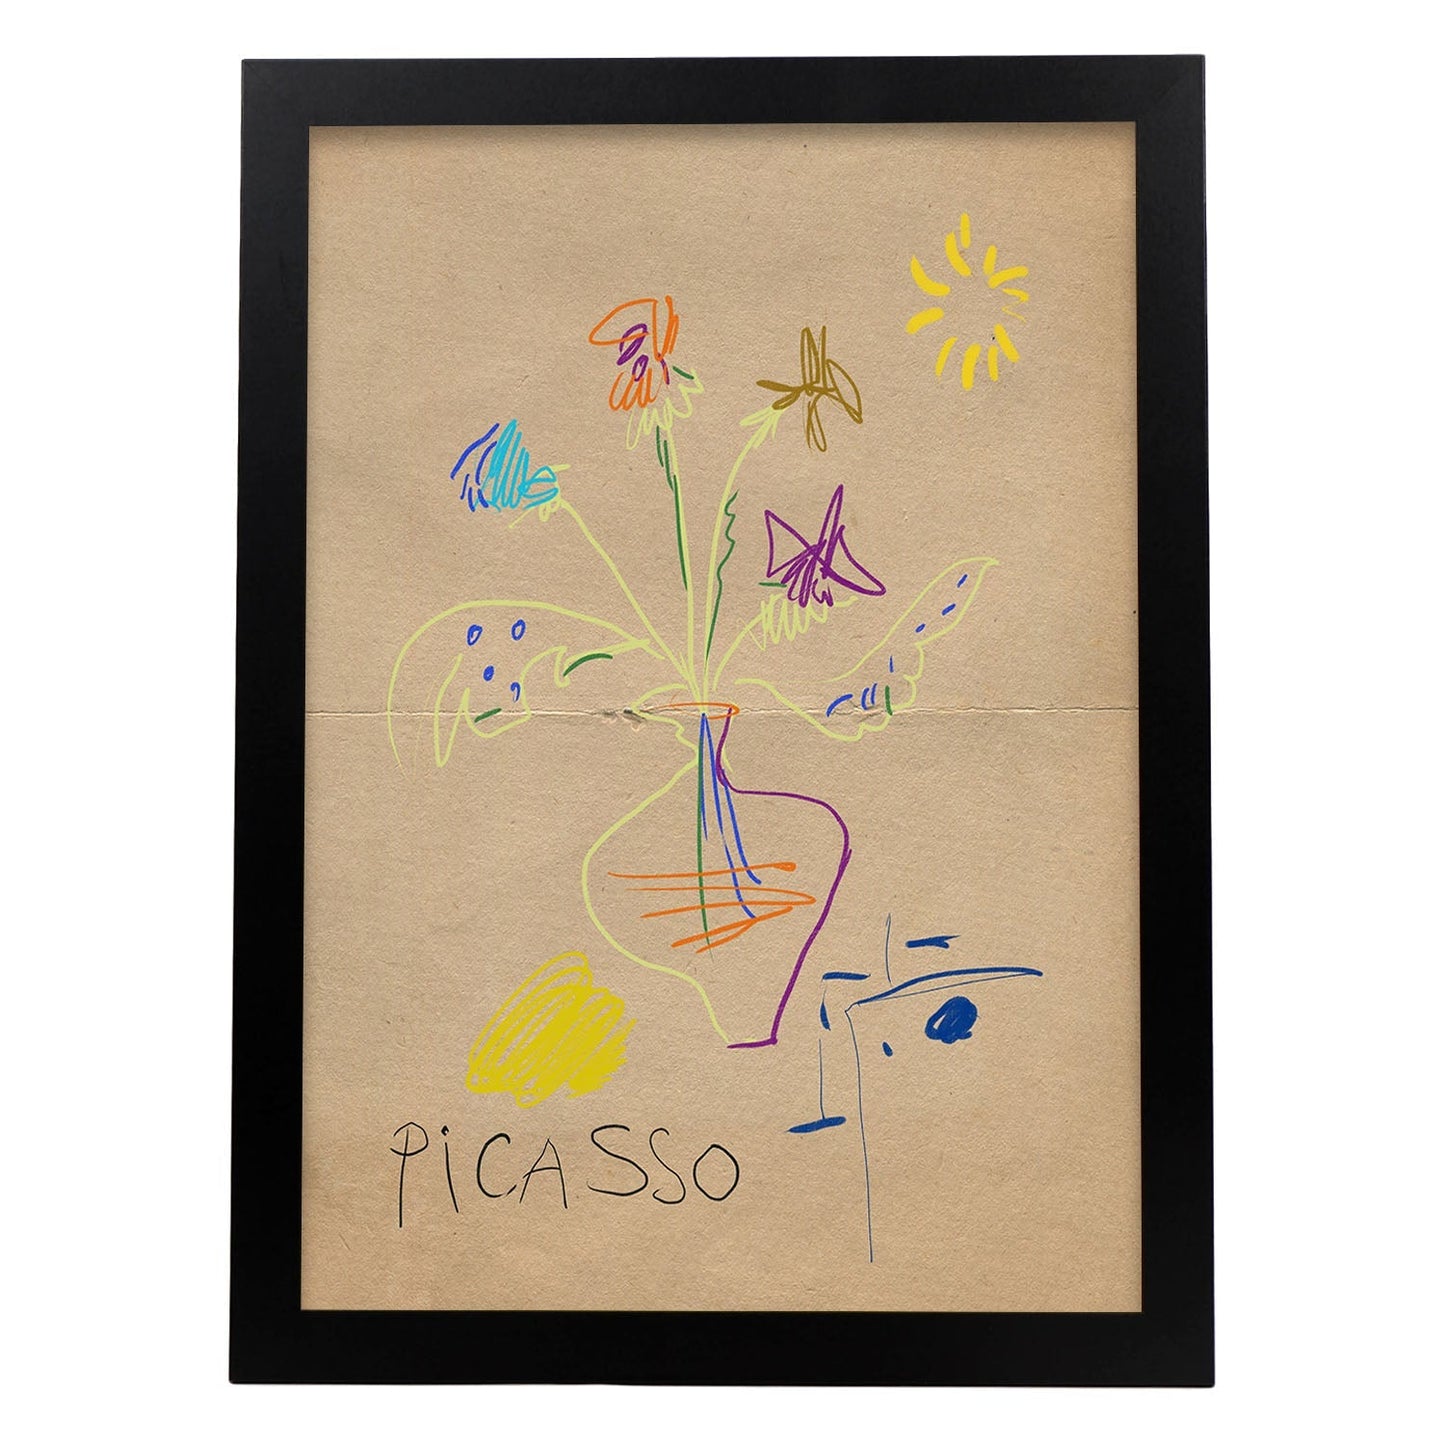 Lamina artistica decorativa con ilustración de Exposición Picasso 3-Artwork-Nacnic-A3-Marco Negro-Nacnic Estudio SL